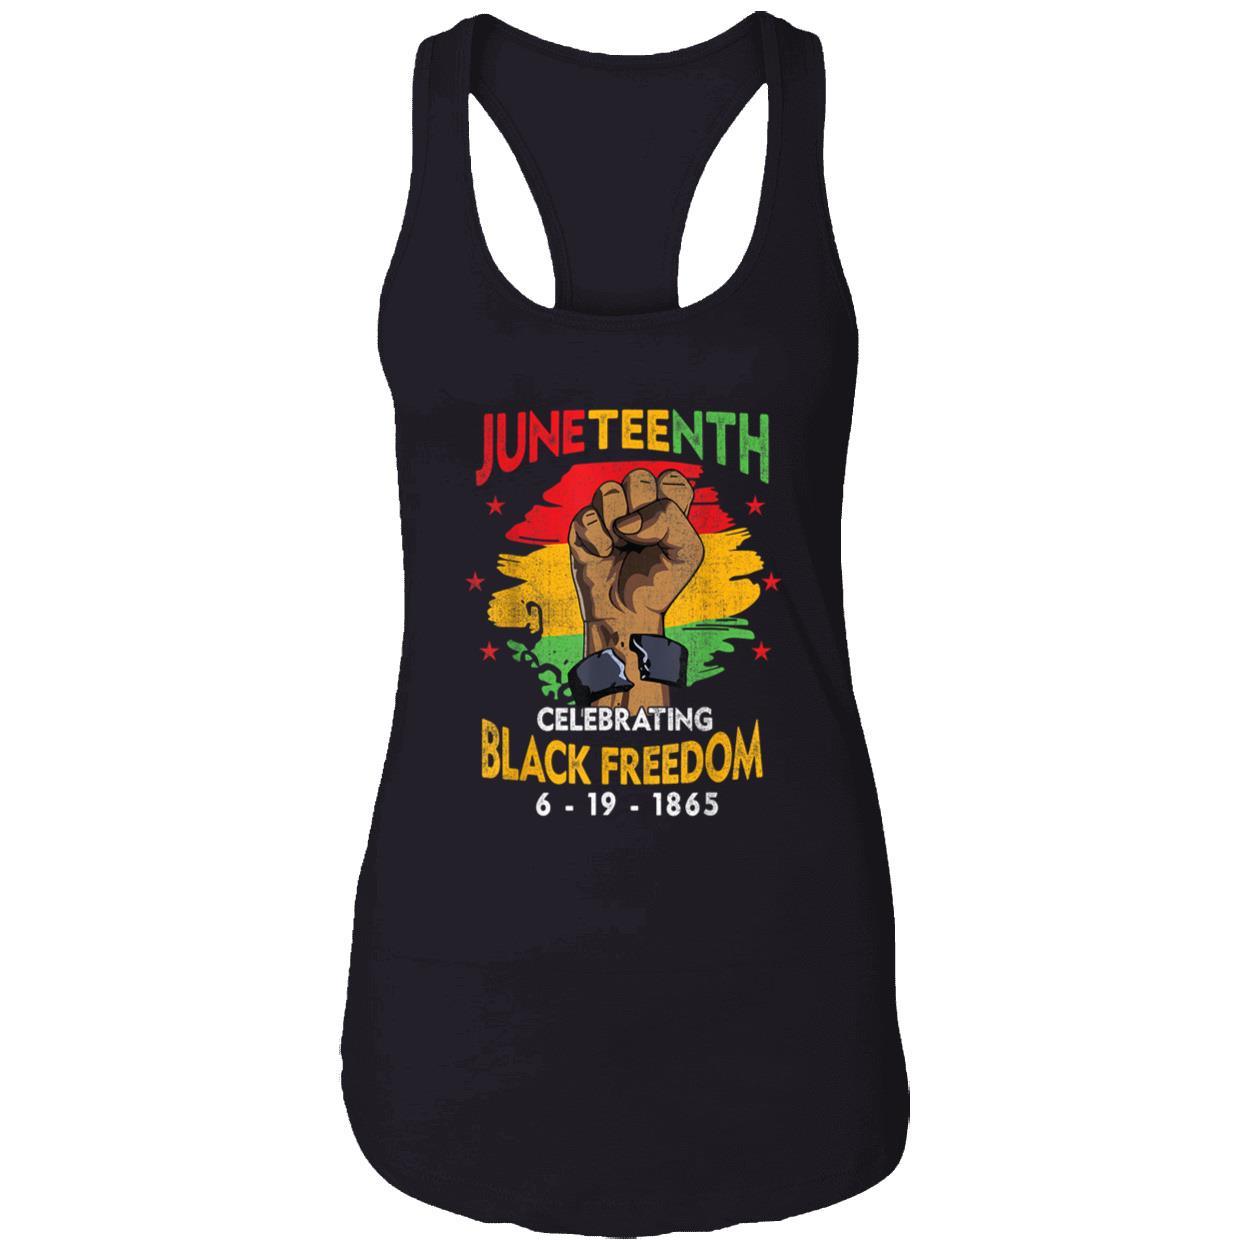 Juneteenth Celebrating Black Freedom 6-19-1865 Shirt